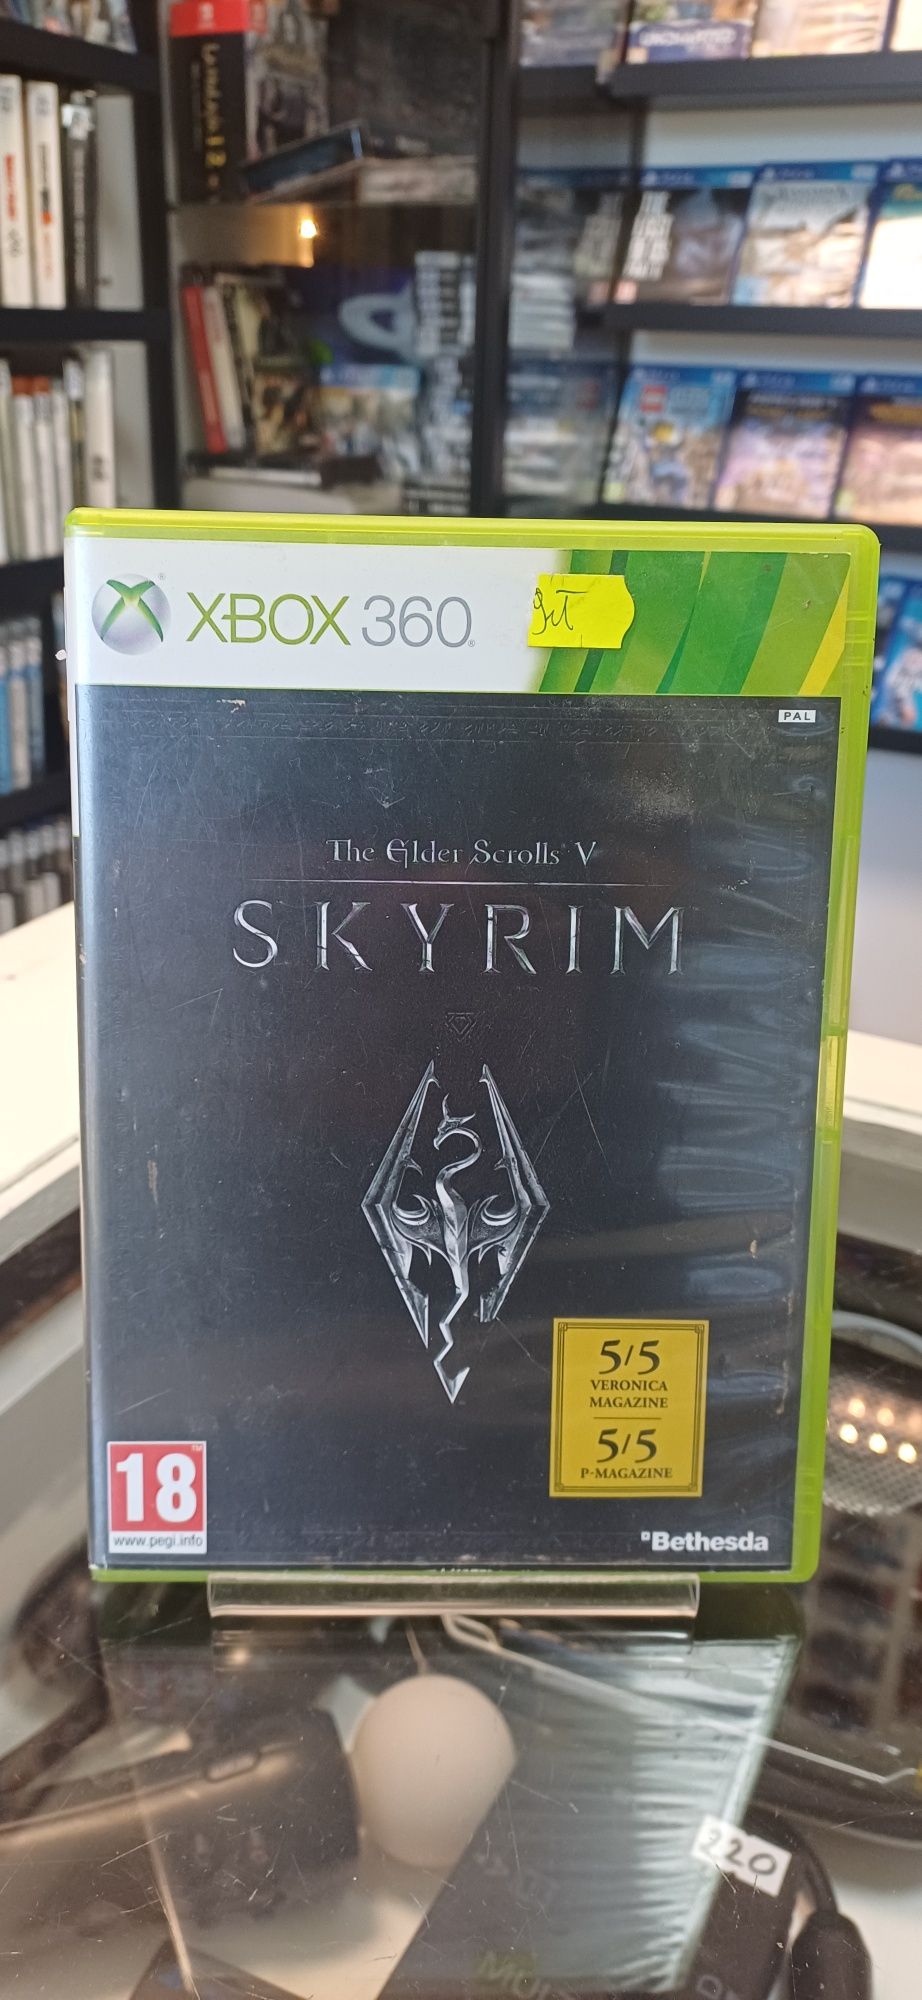 Skyrim - Xbox 360